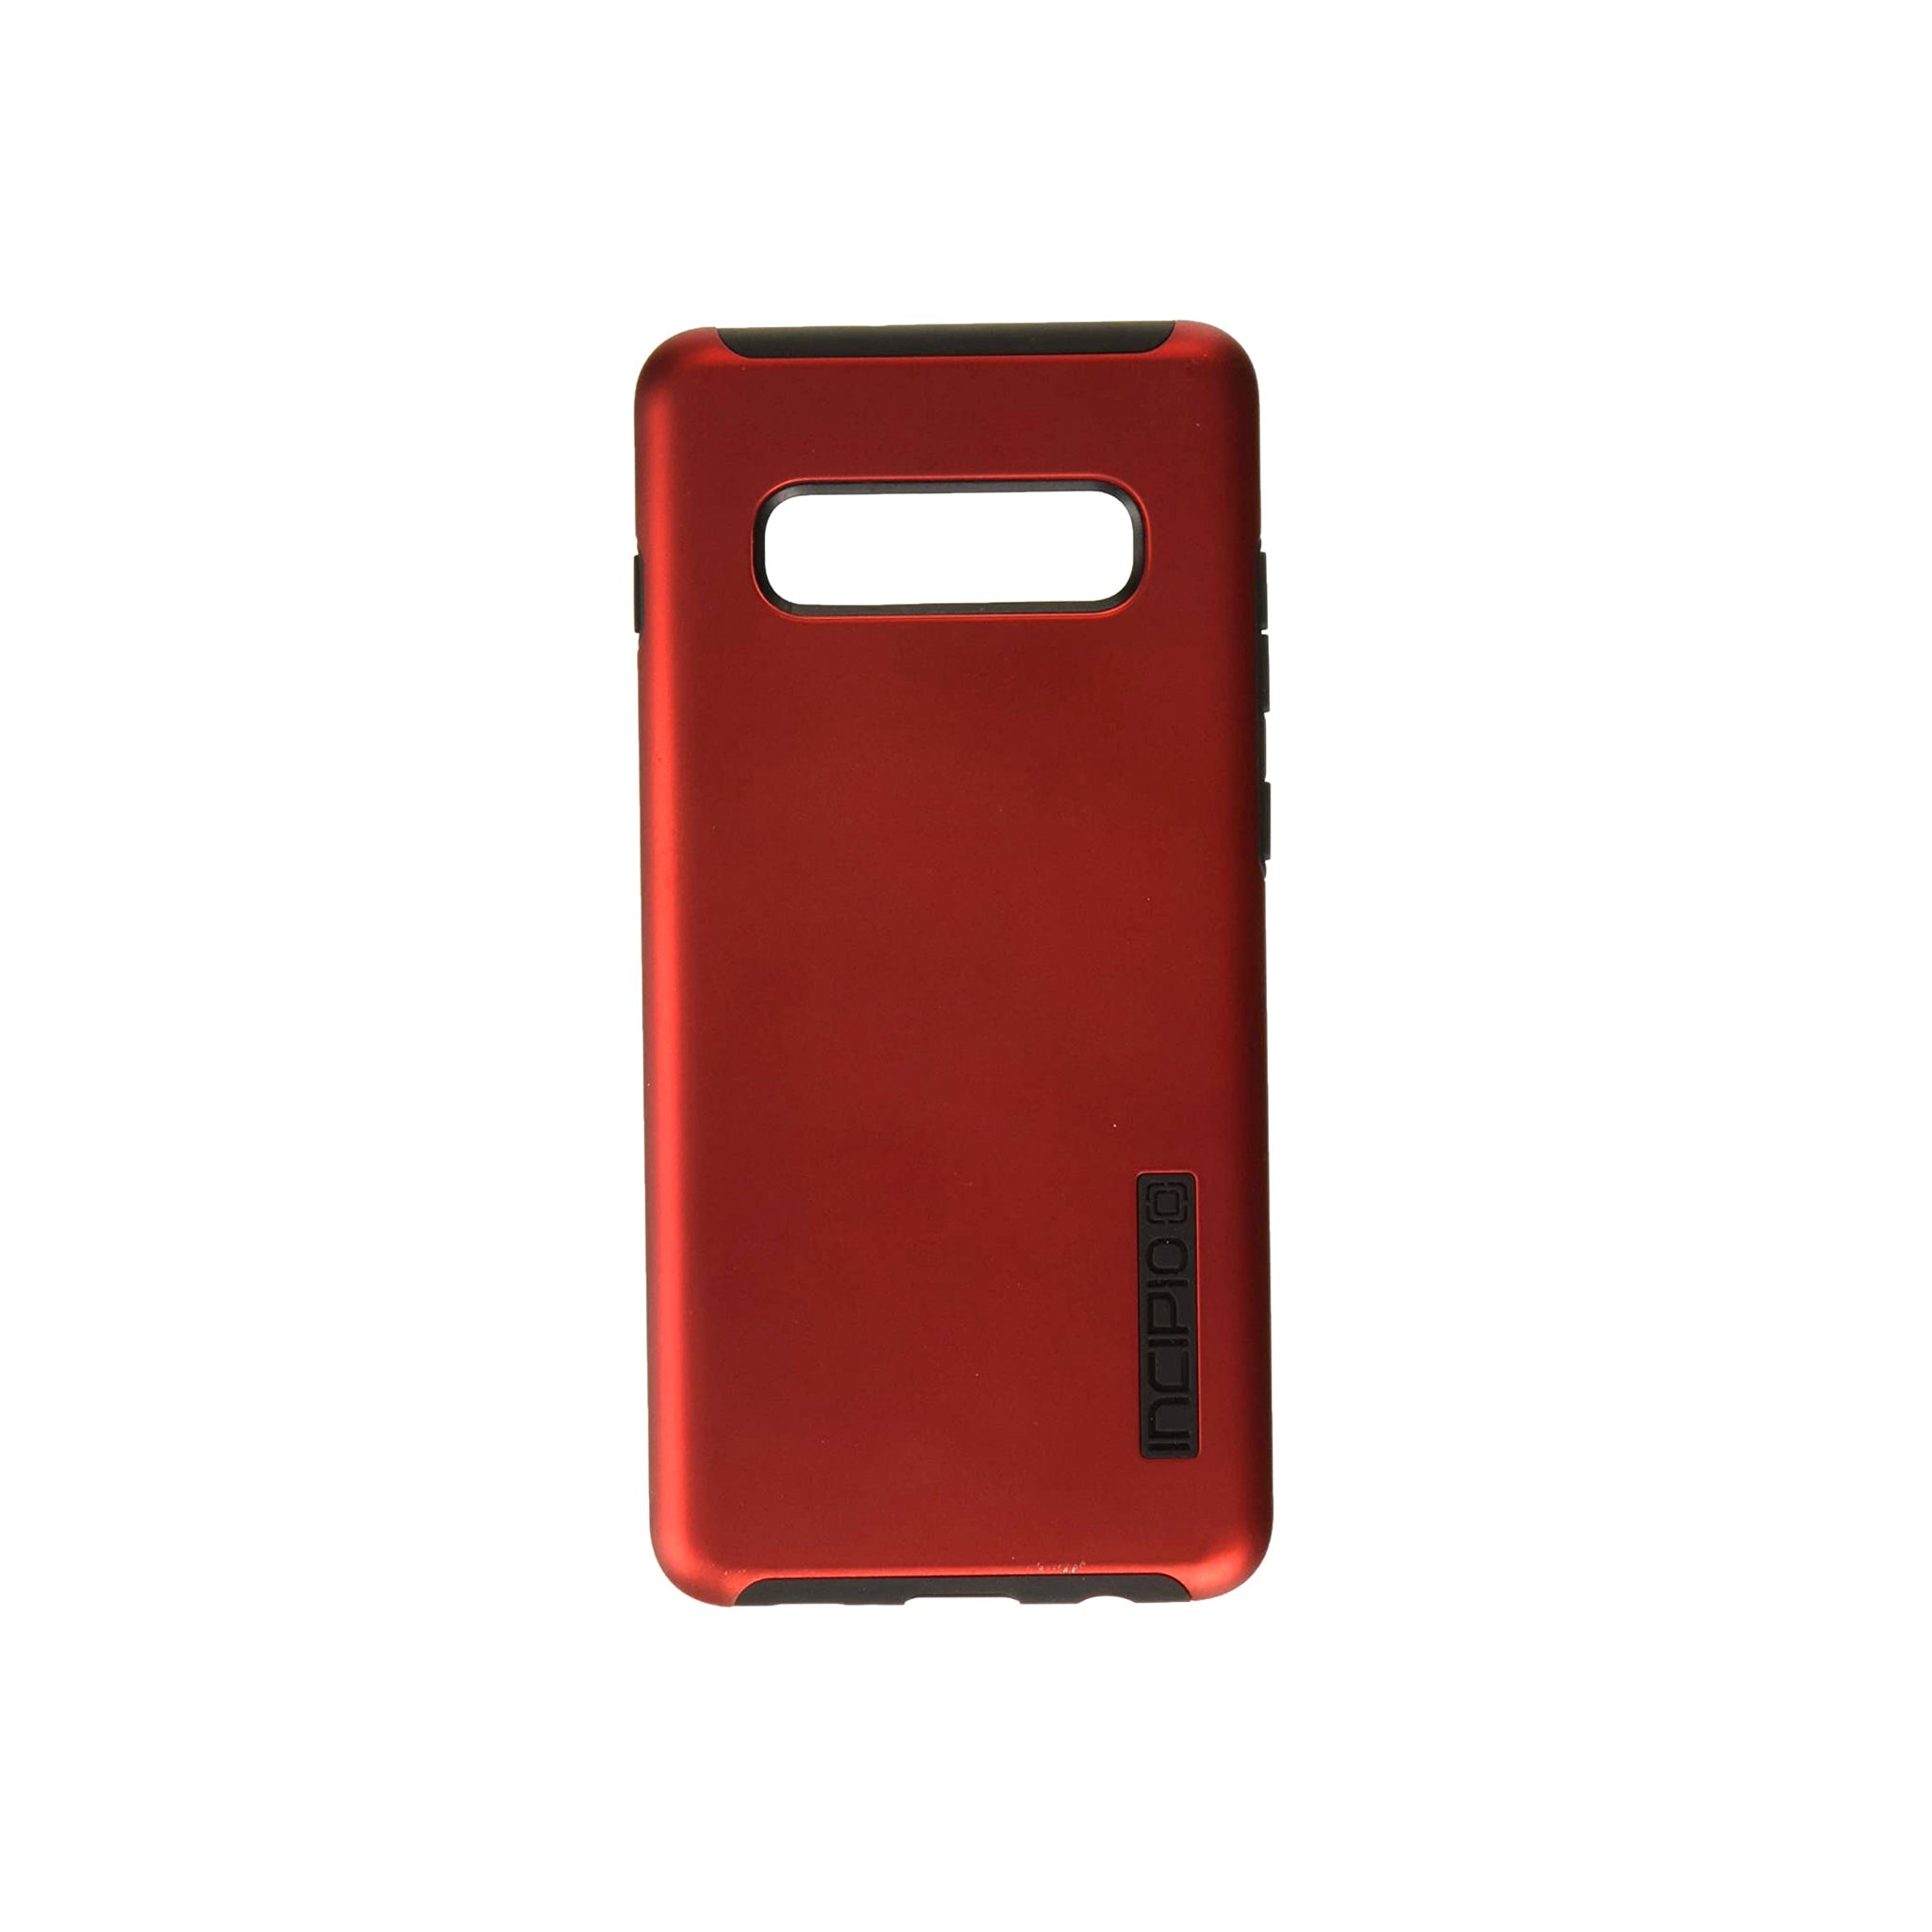 Incipio - DualPro Case For Samsung Galaxy S10 Plus - Iridescent Red And Black